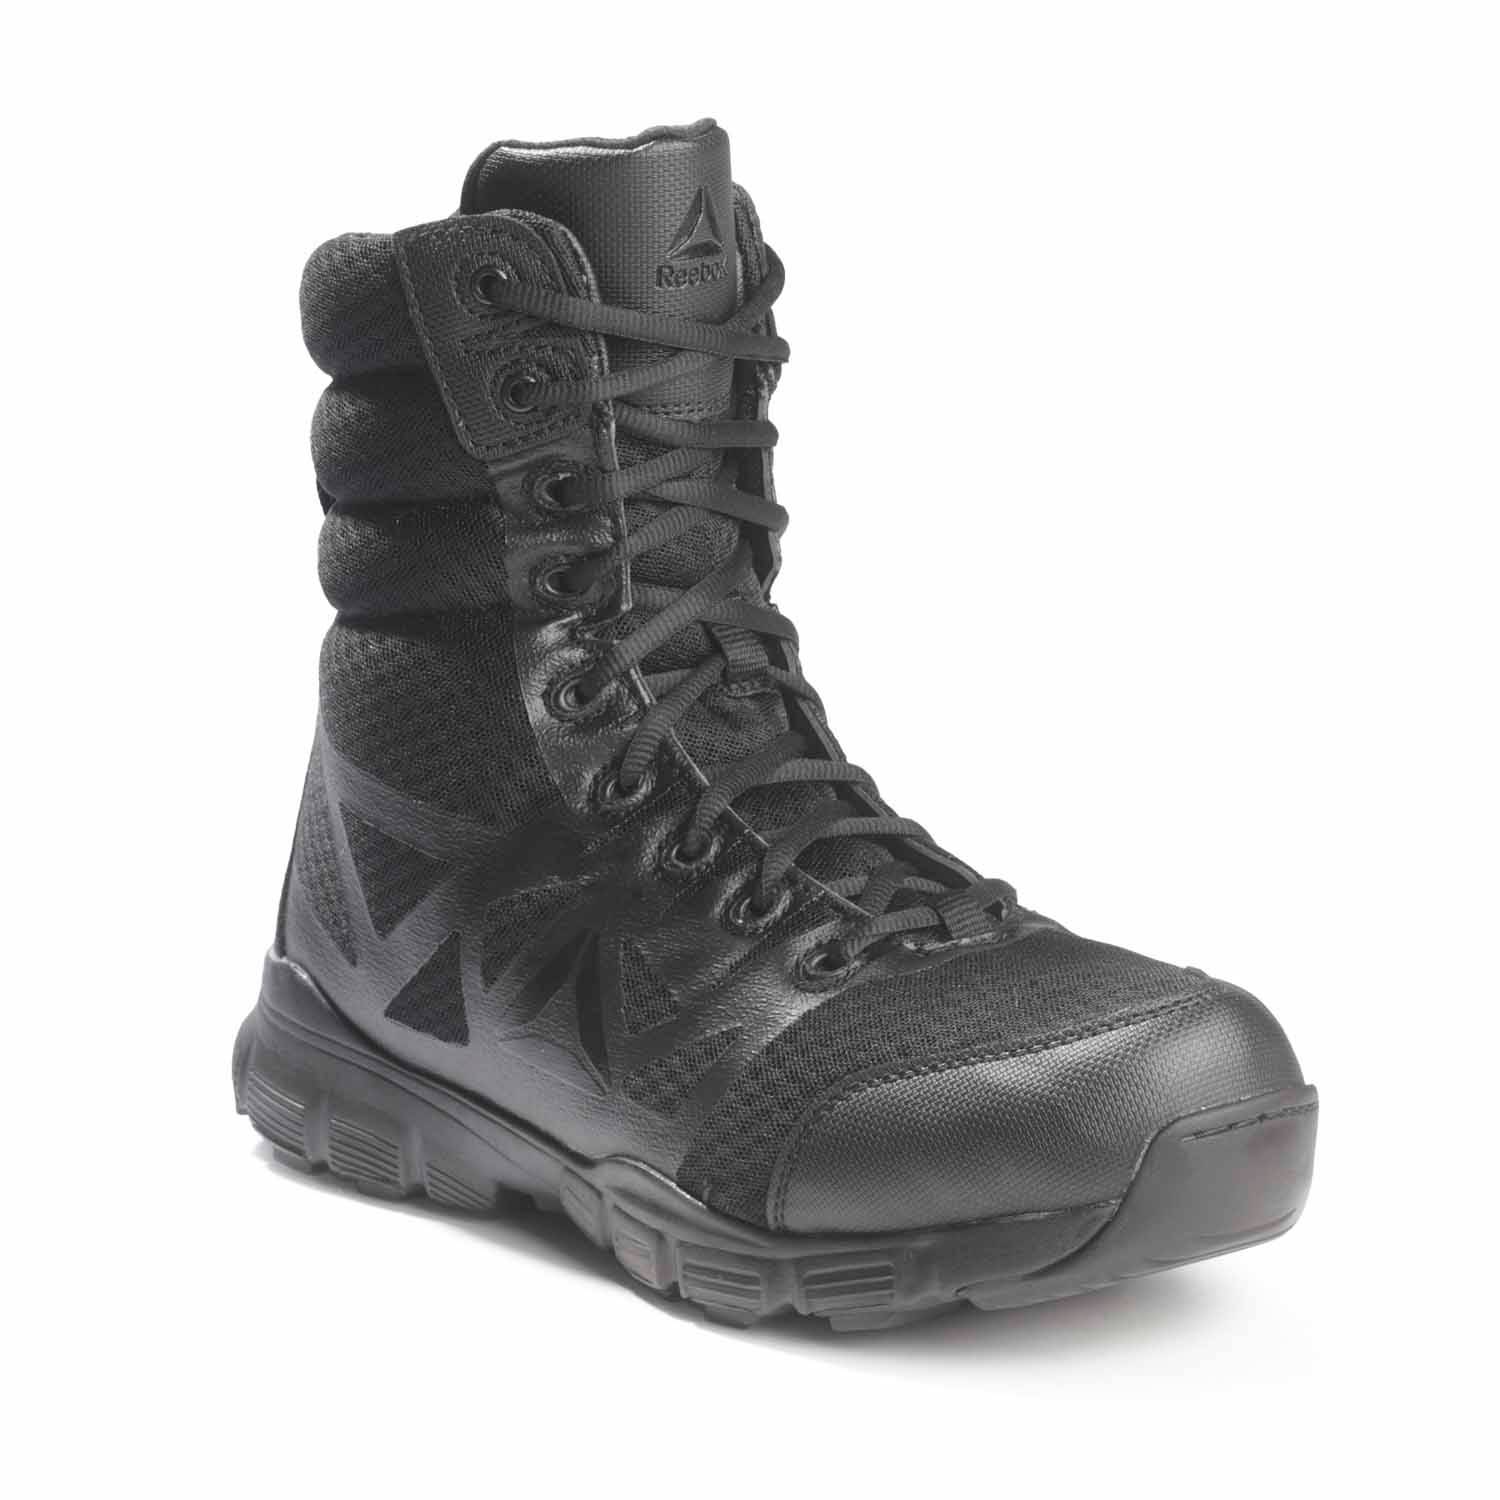 Reebok 8" Dauntless Ultra-Light Side-Zip Duty Boots